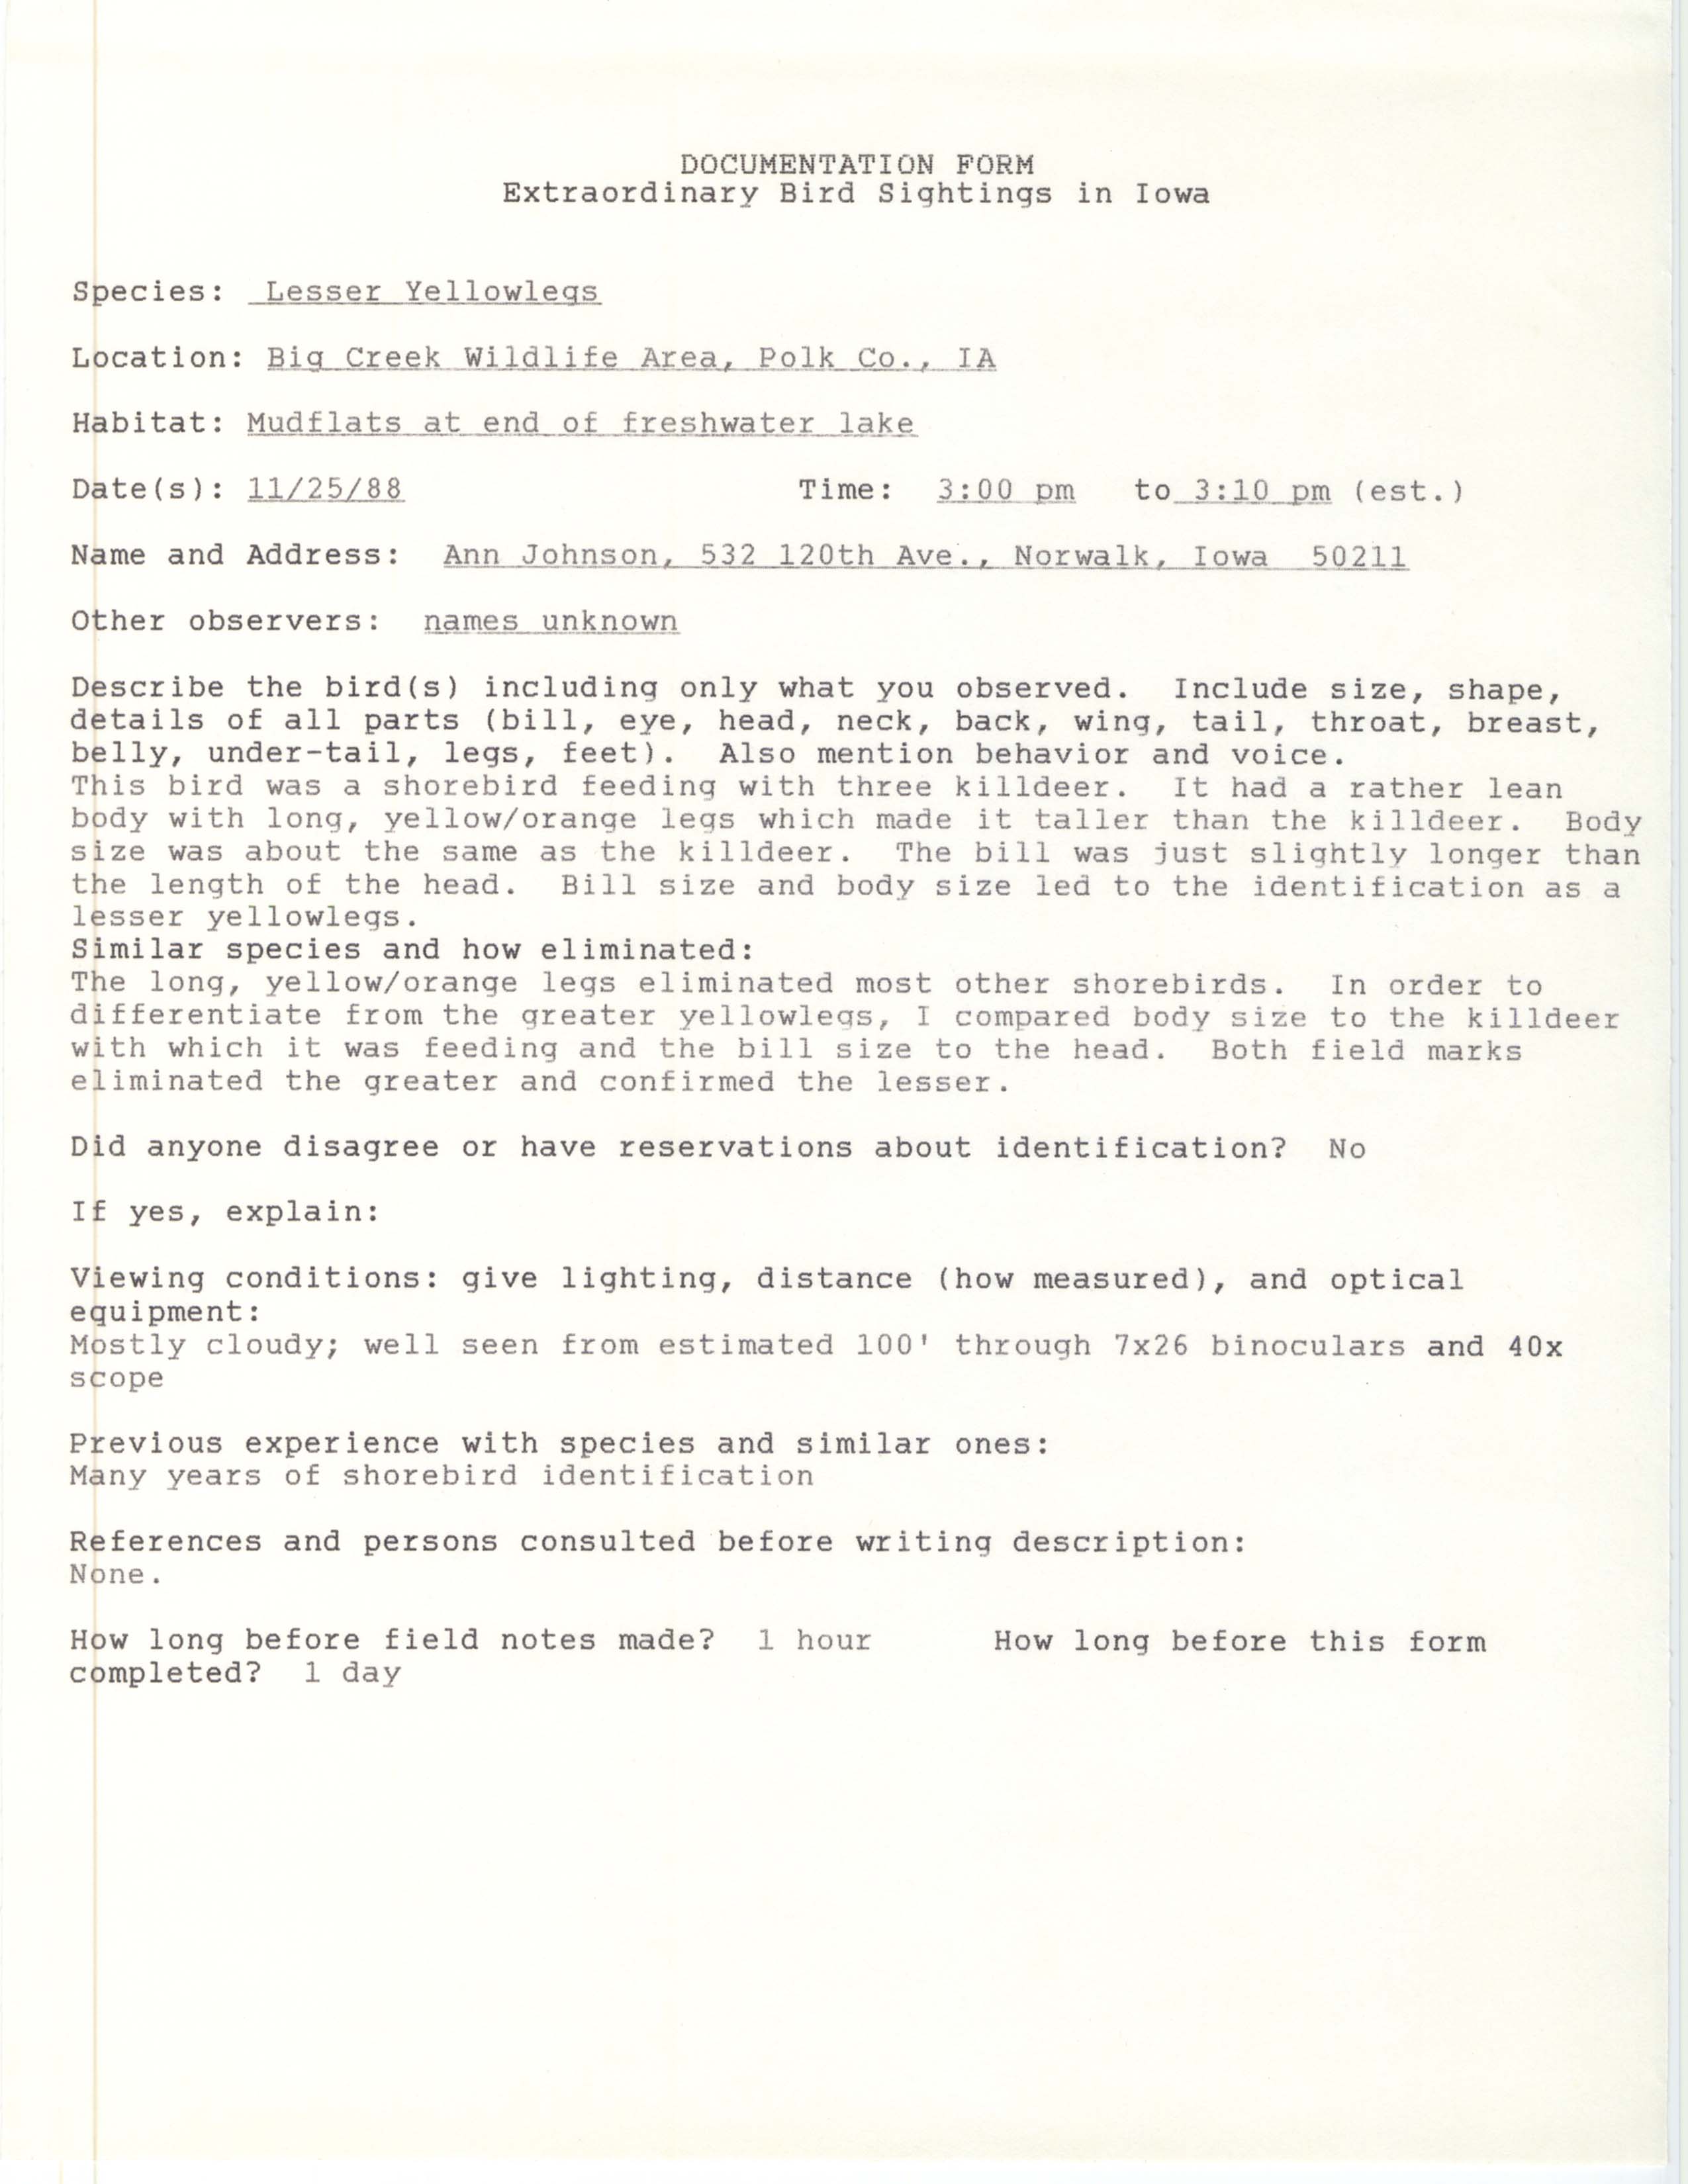 Rare bird documentation form for Lesser Yellowlegs at Big Creek Wildlife Area, 1988